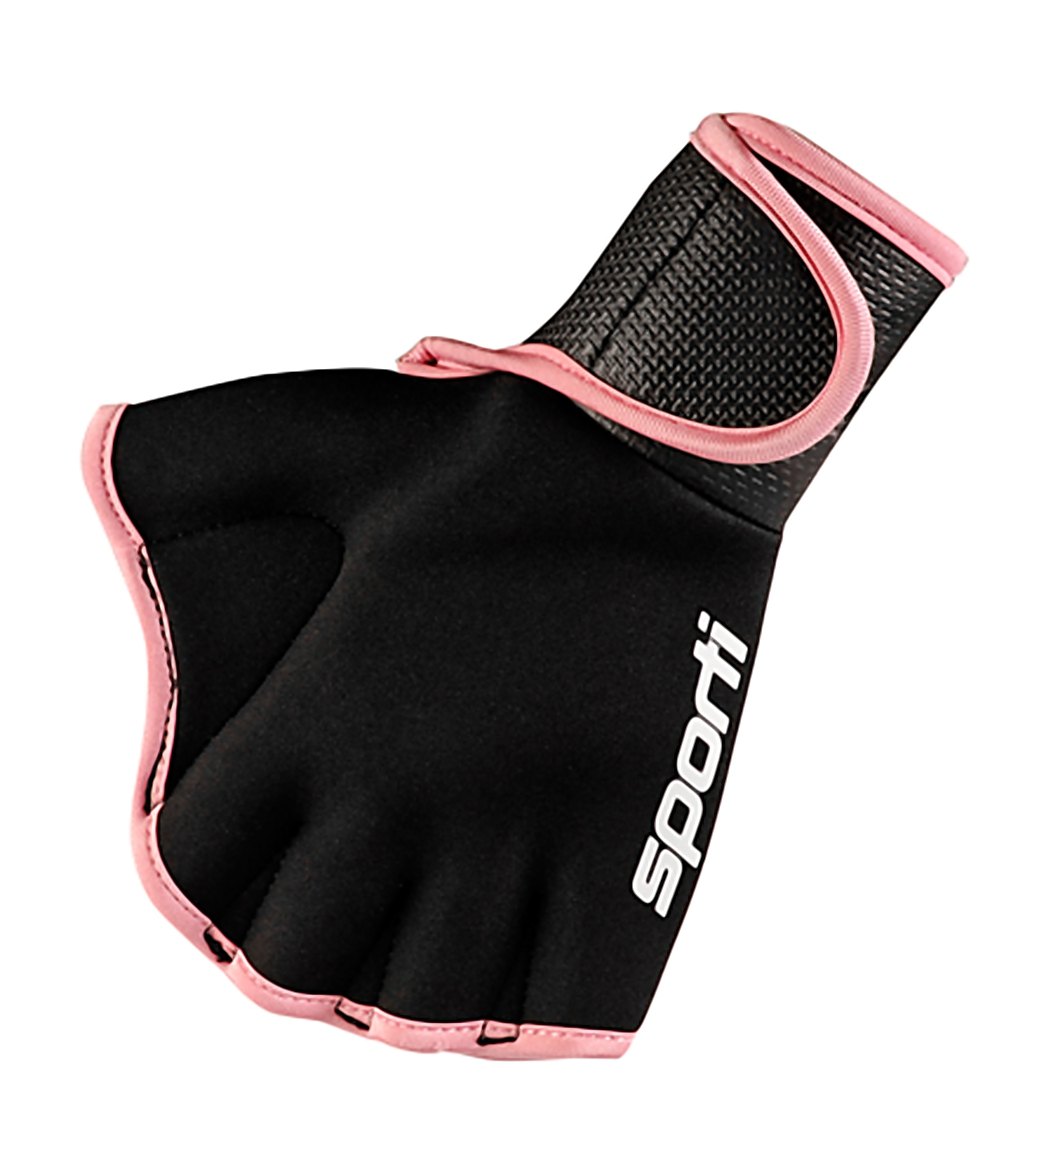 webbed gloves for swimming